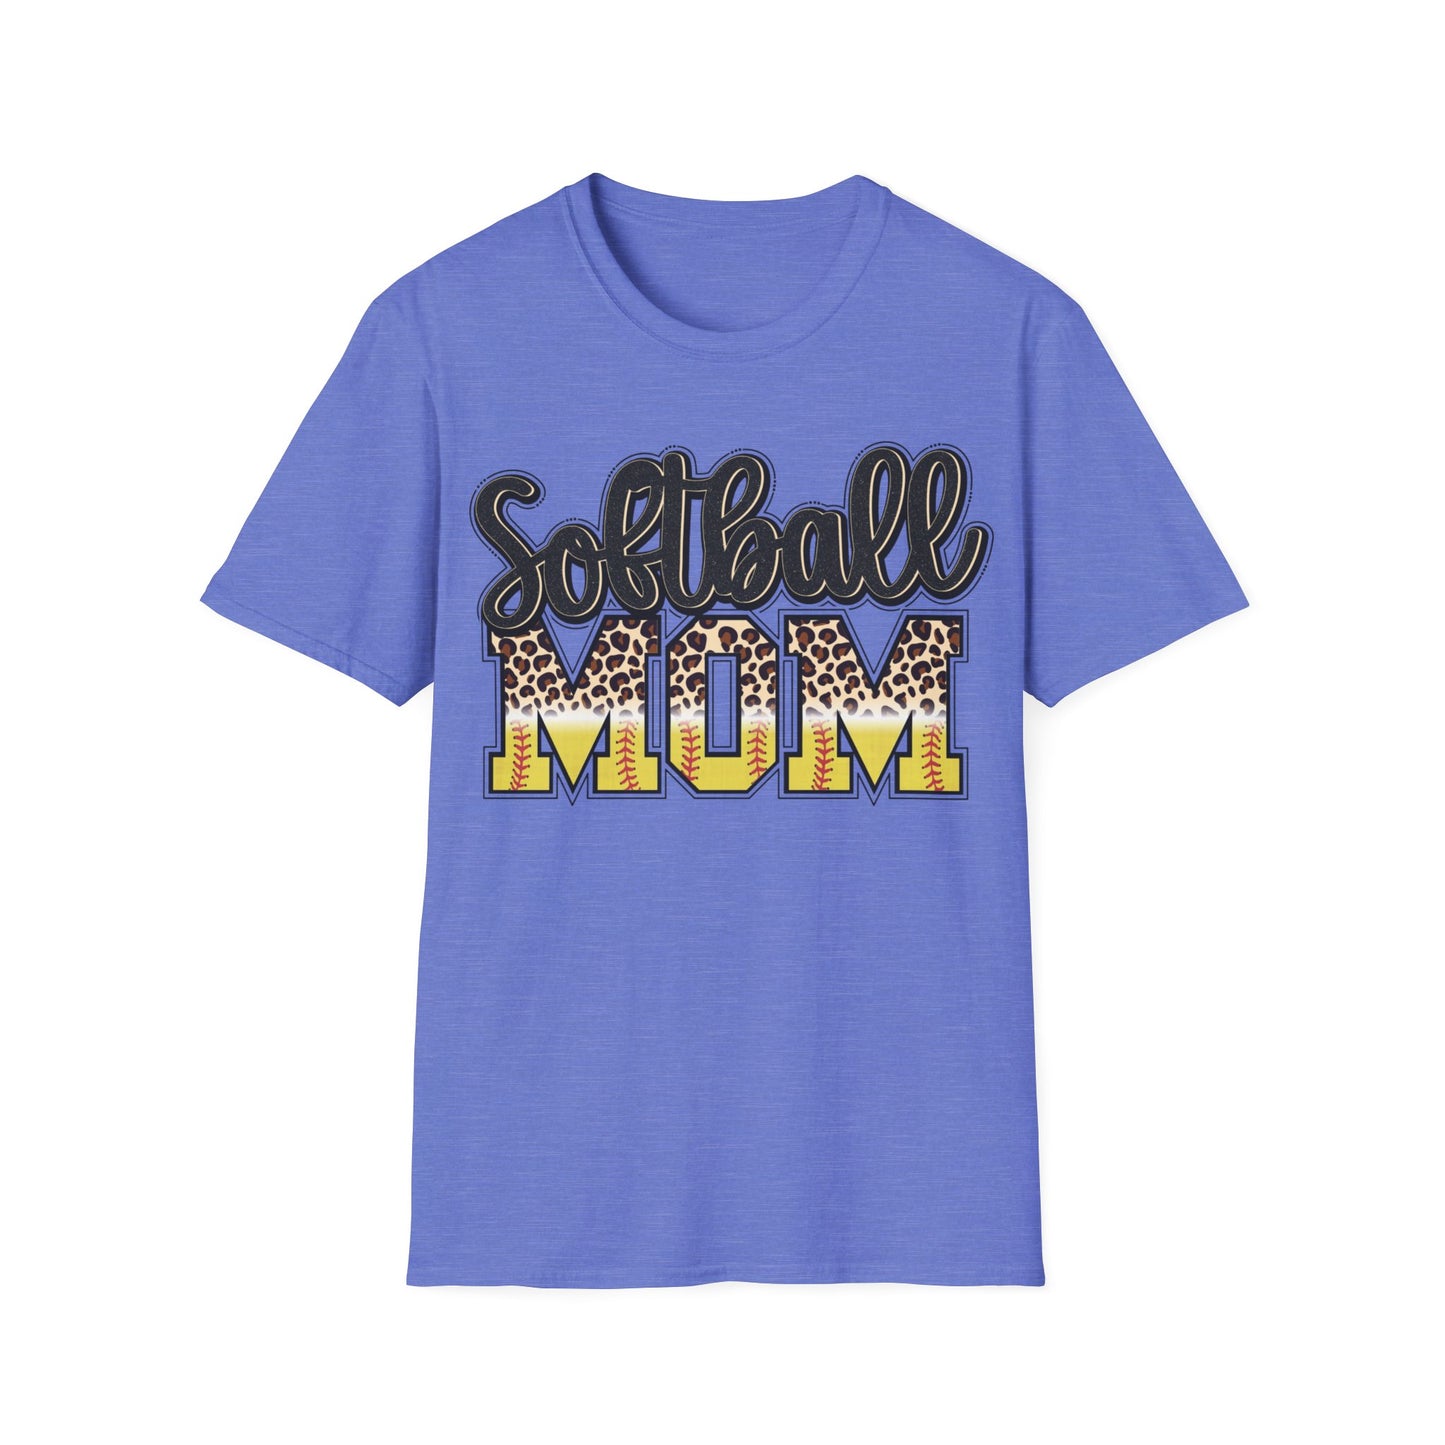 Unisex Softstyle T-Shirt - Softball Mom